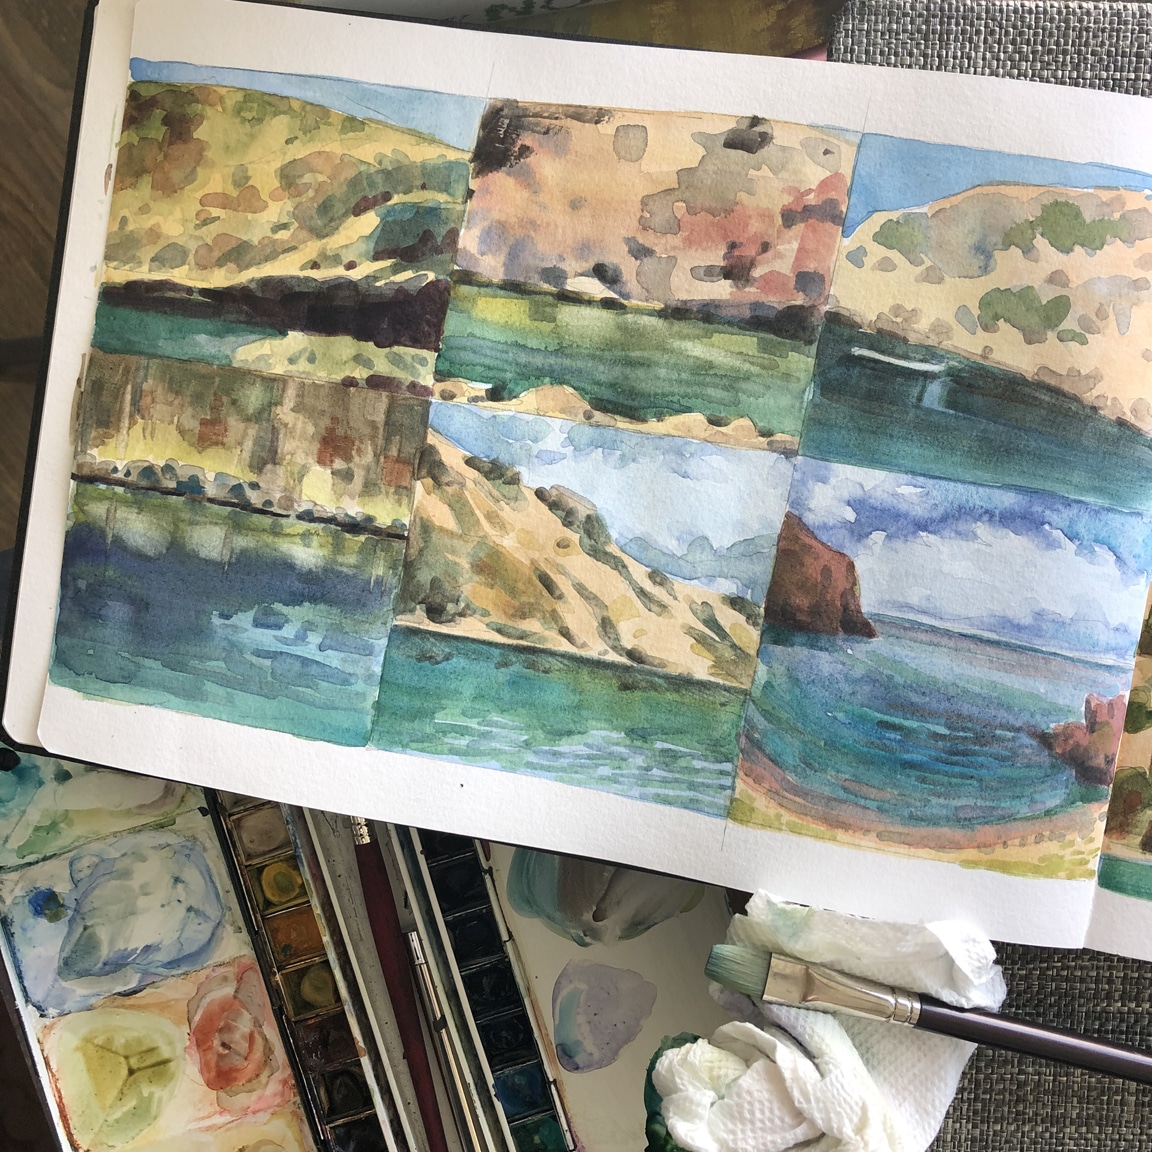 watercolor sketchbook practice with coastal cliff landscape scenes